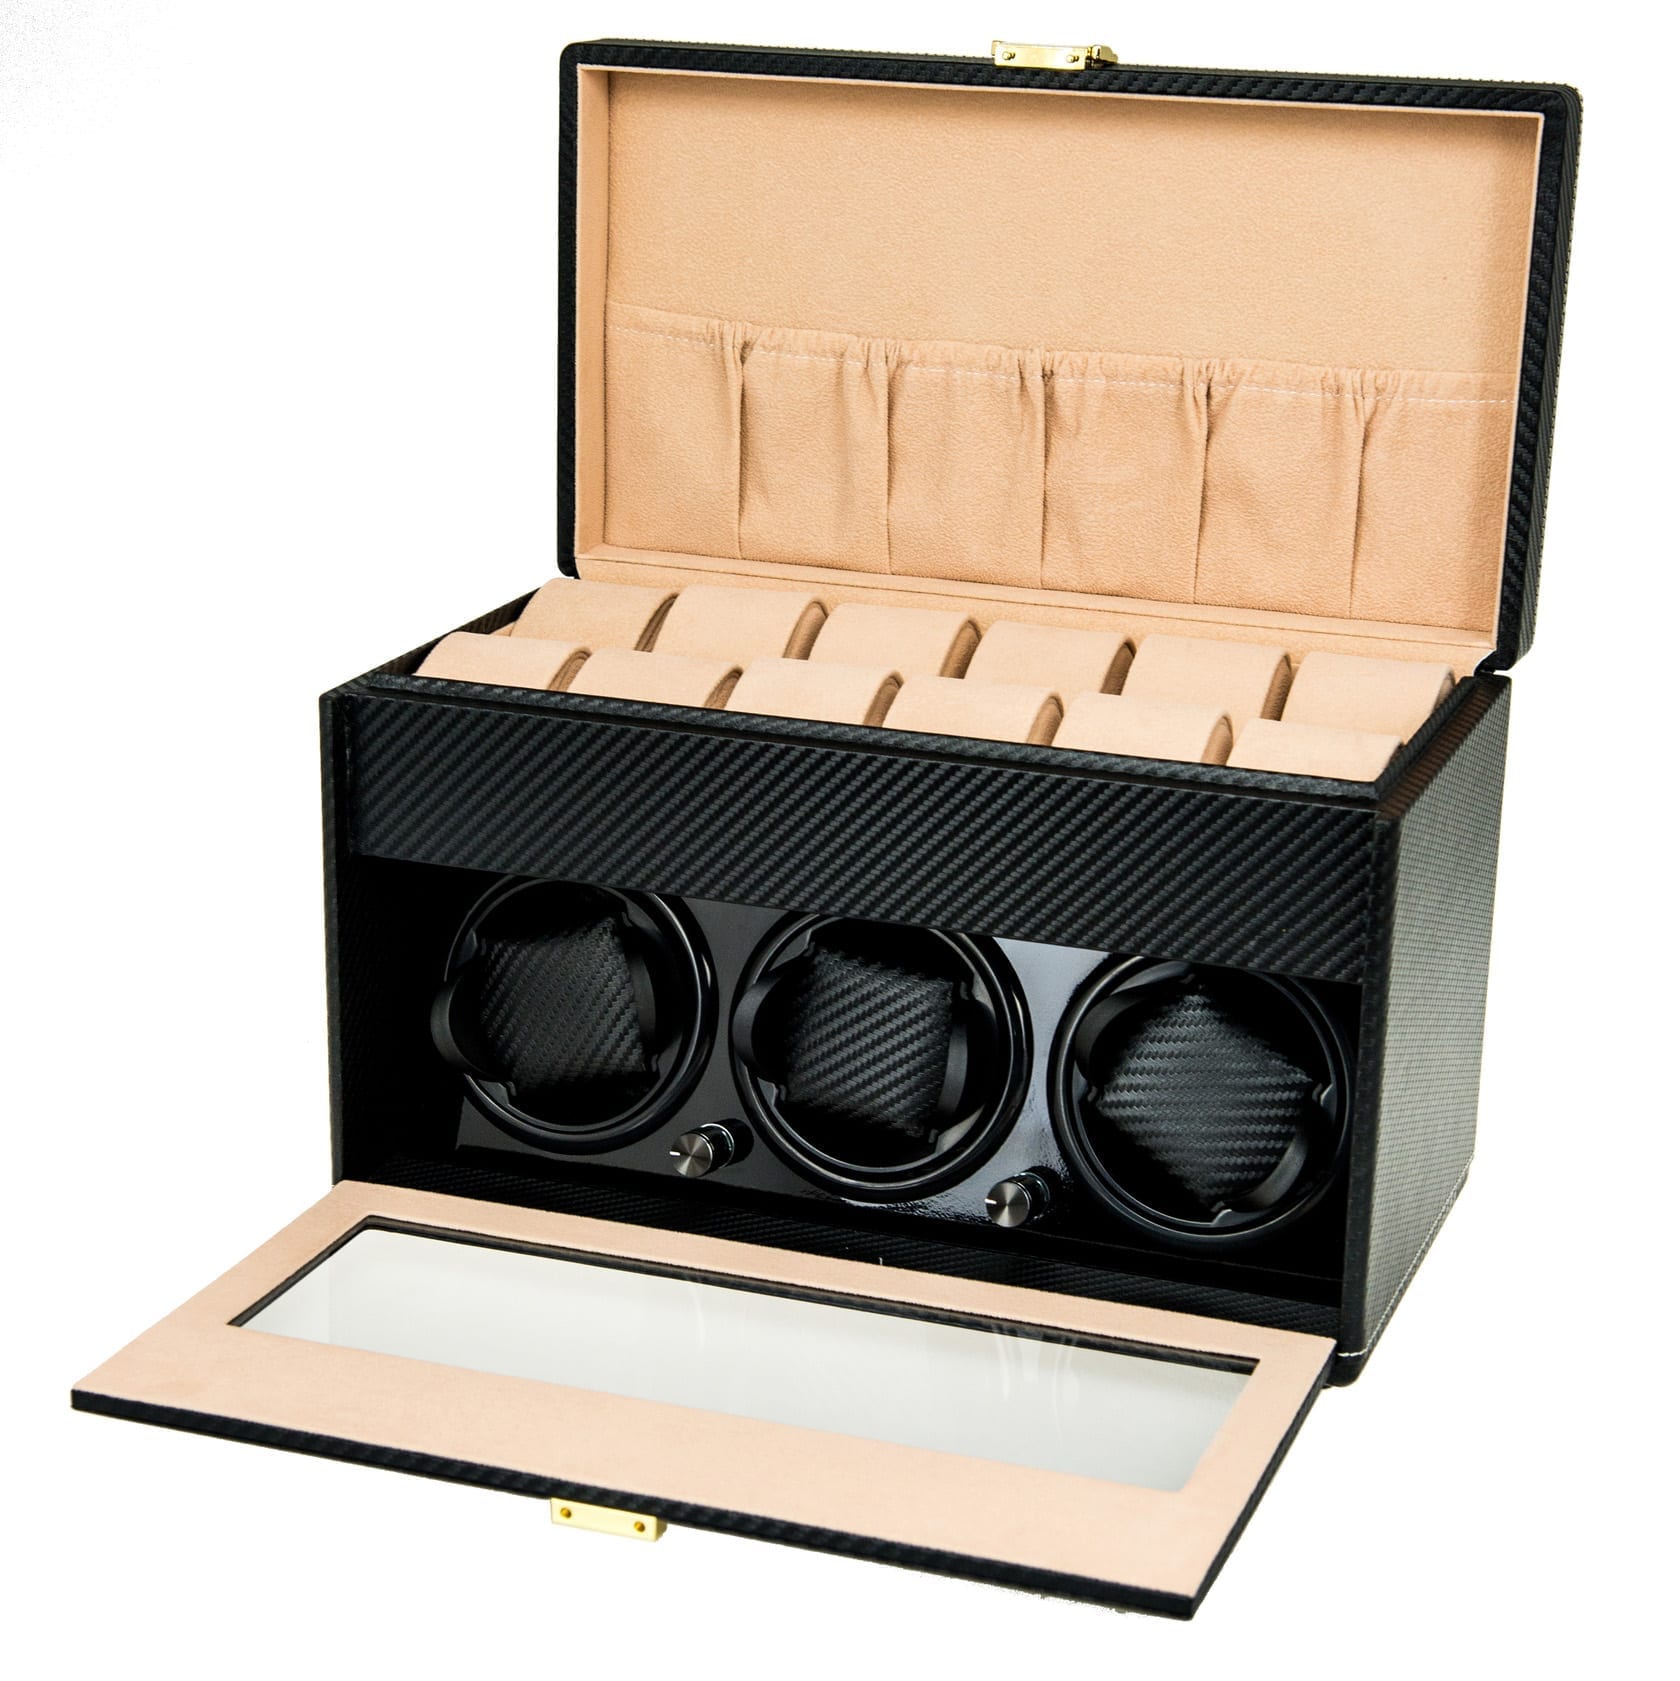 Luxury Automatic Watch Winder black Carbon fiber leather wooden display storage watch box